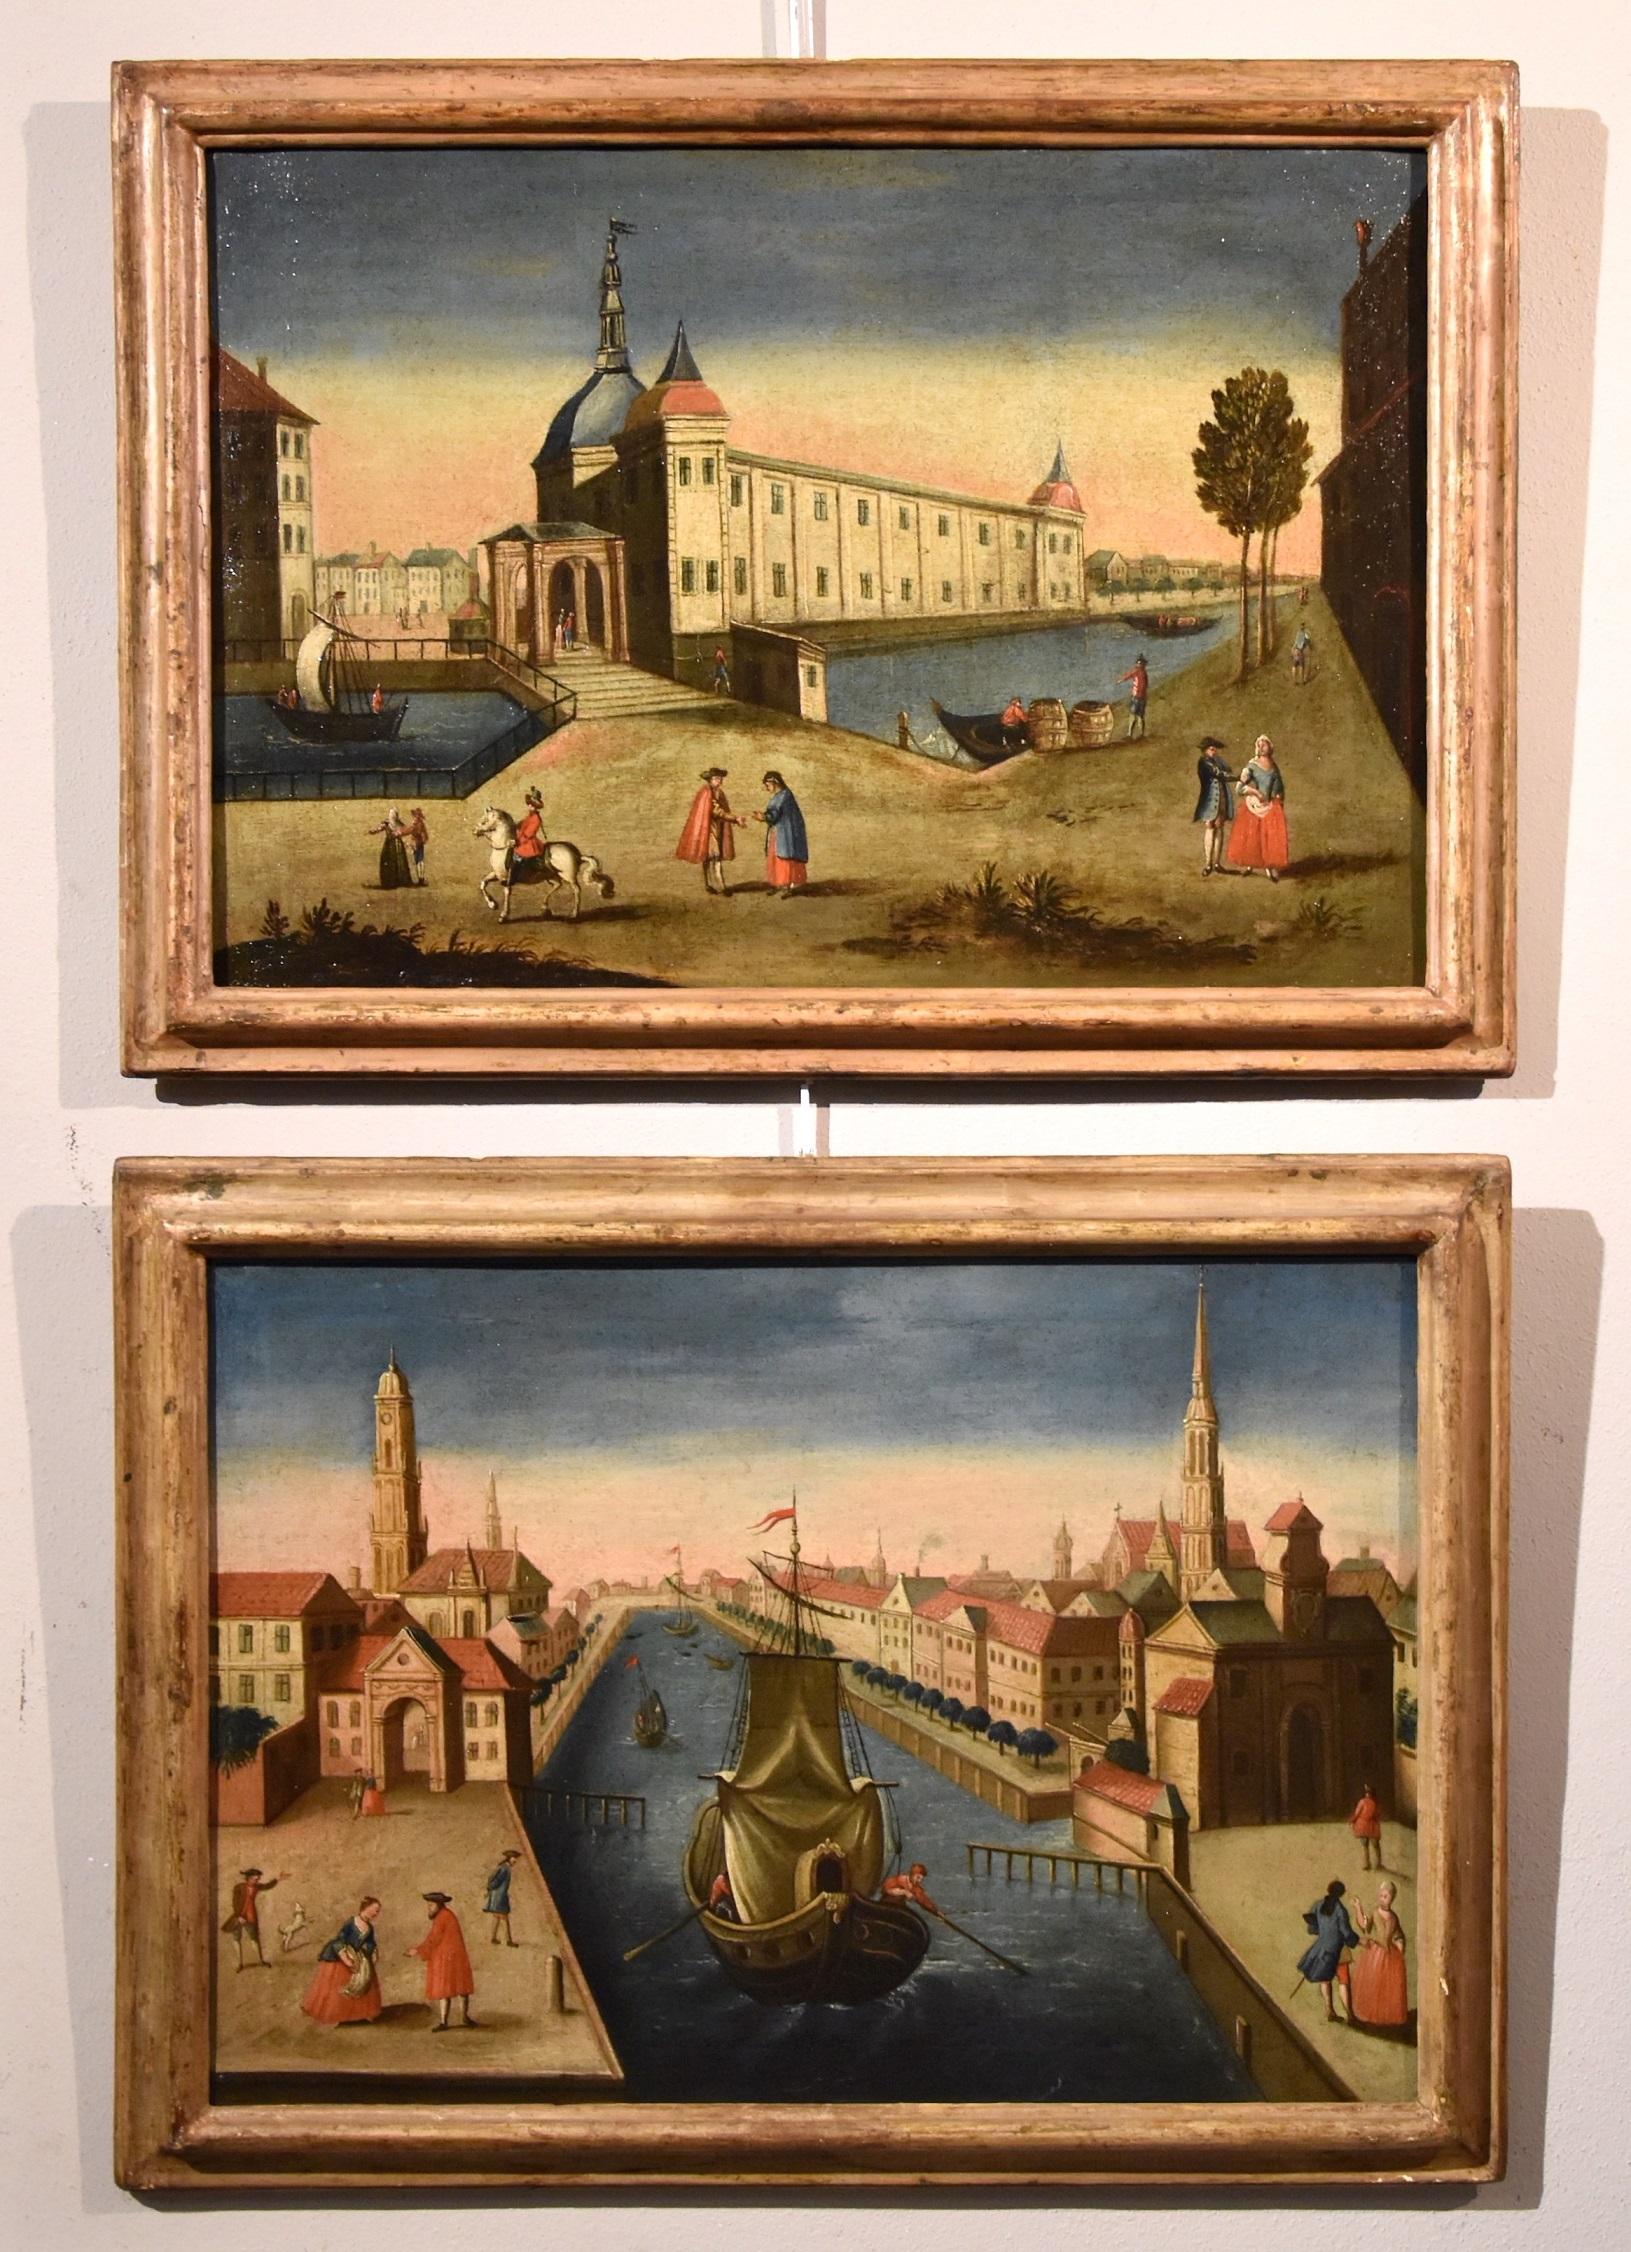 Landscape Painting Eighteenth-century Vedutist painter - Rotterdam Port See Italian Paint Huile sur toile  XVIIIe siècle Vieux maître flamand